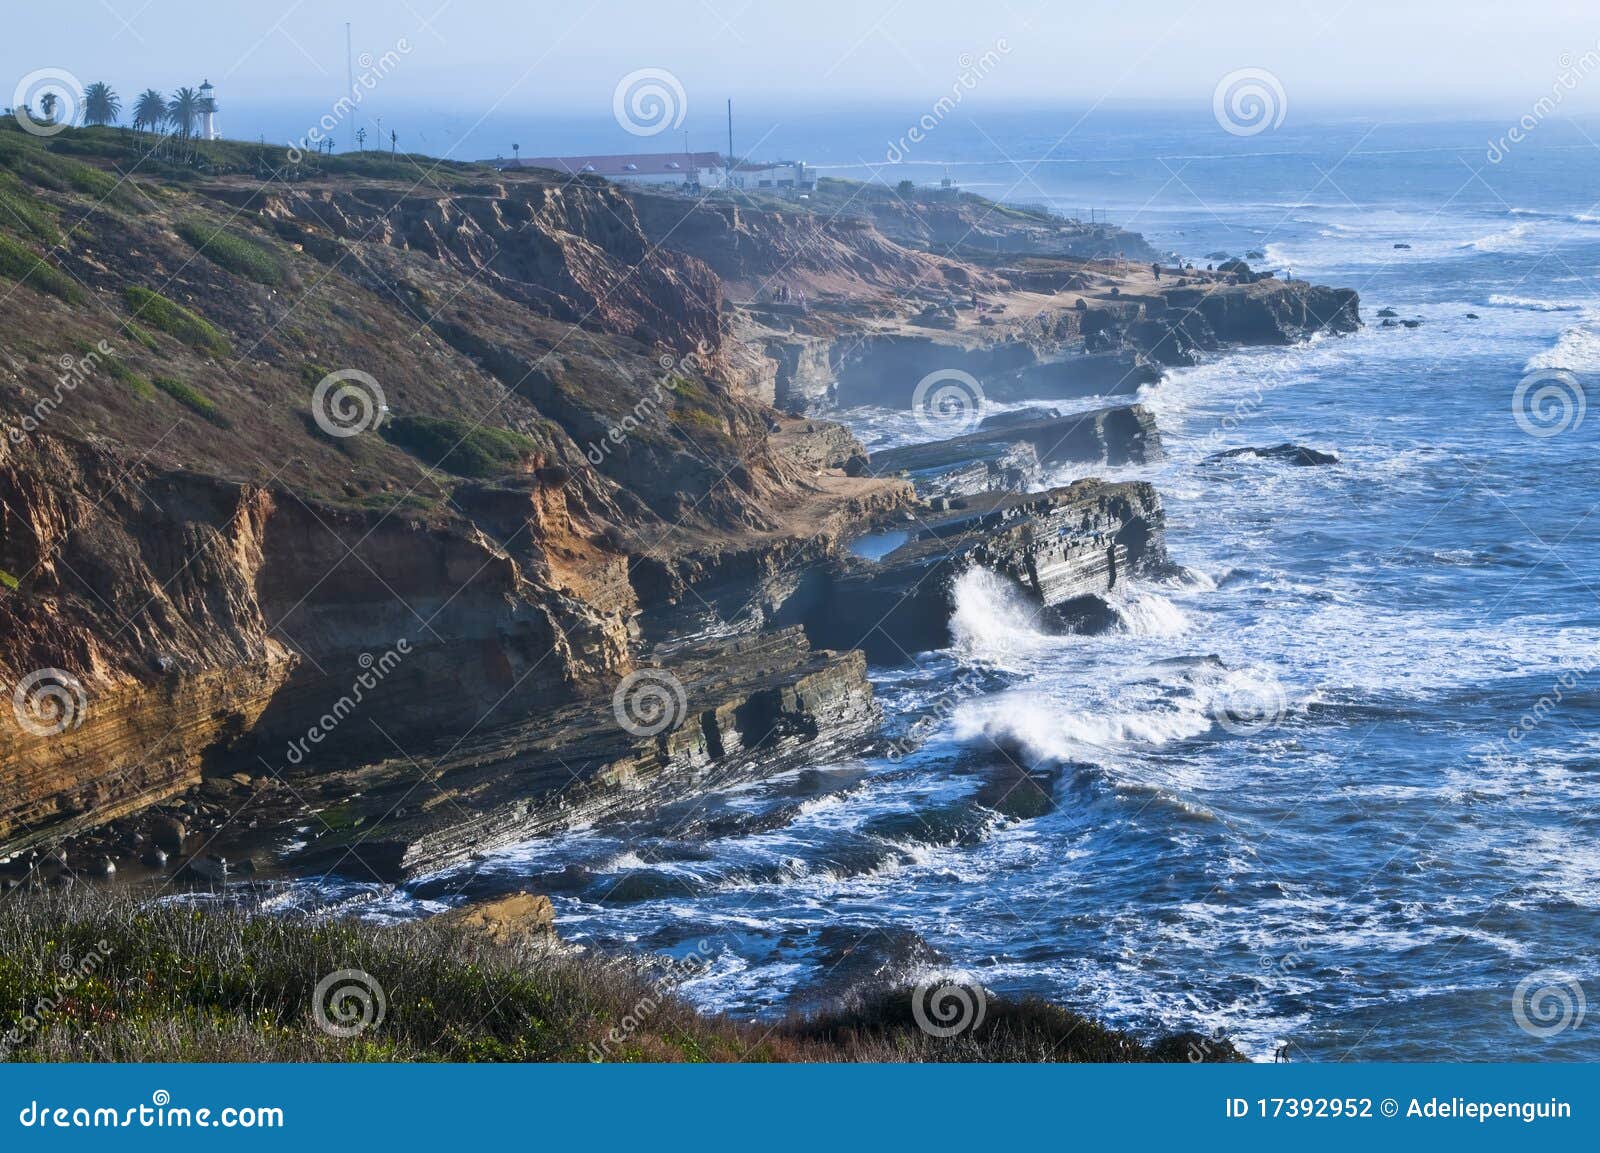 san diego coastline, california